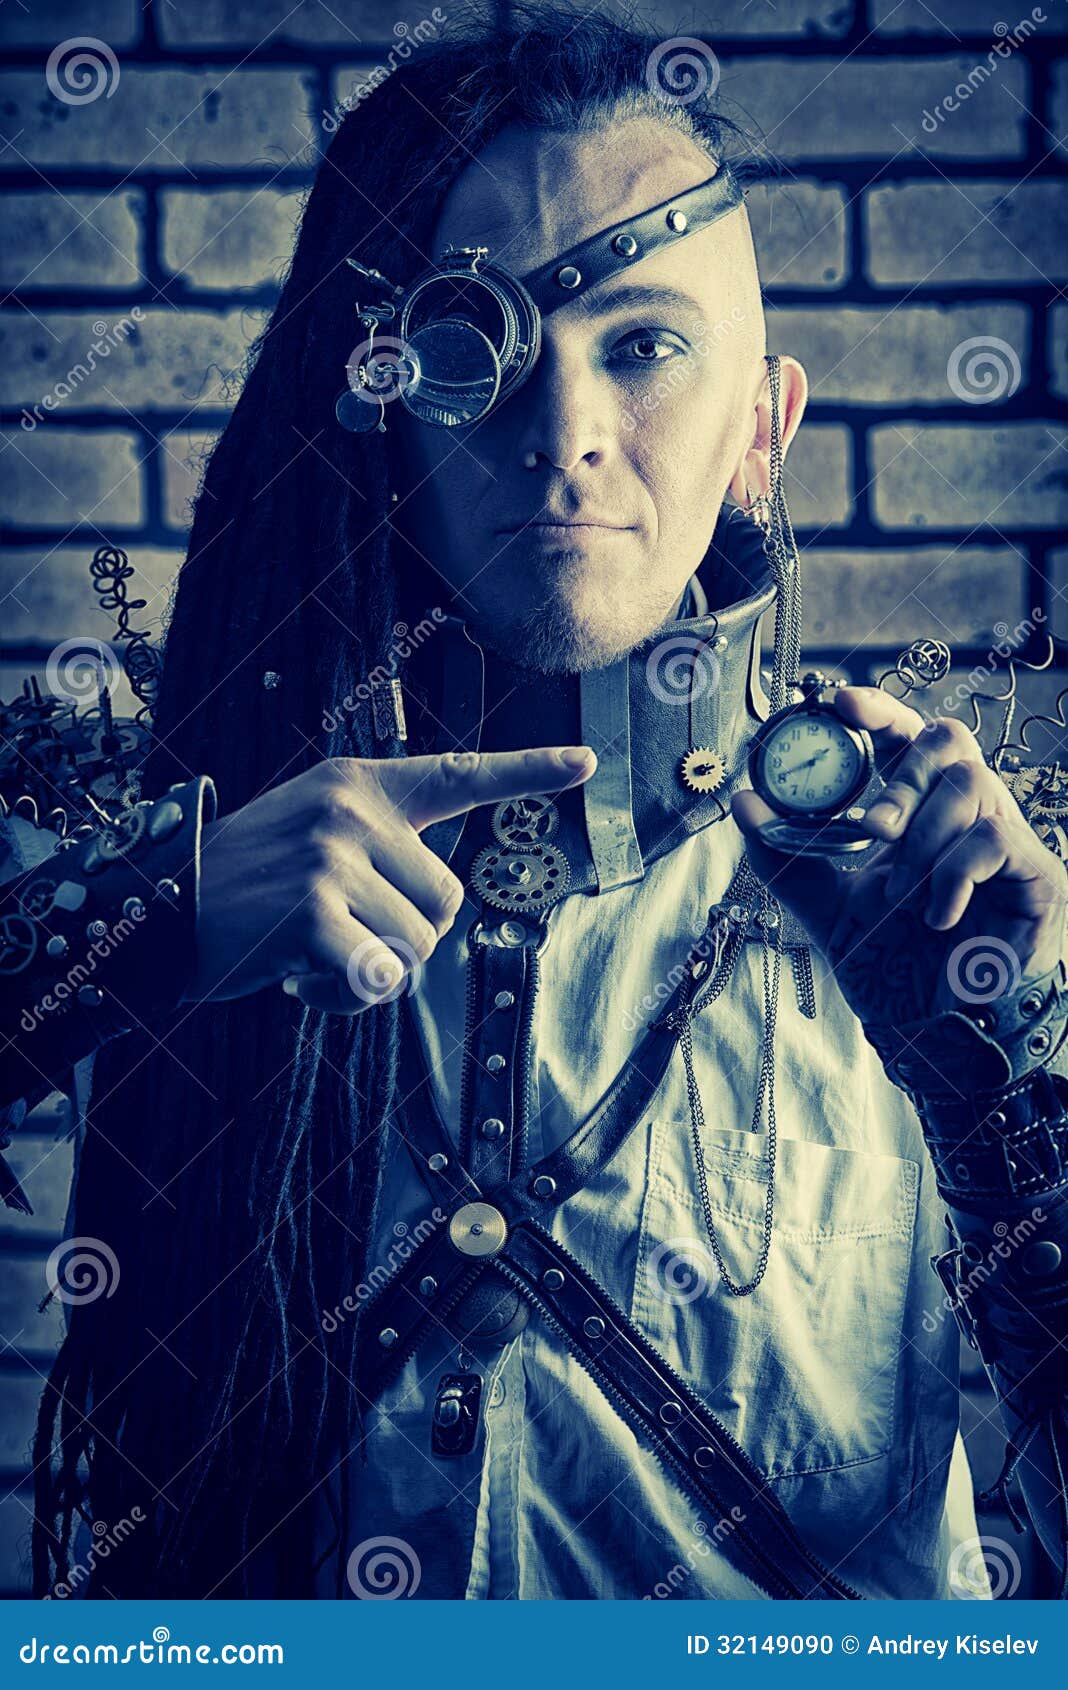 Cyberpunk man stock photo. Image of grunge, hairstyle 